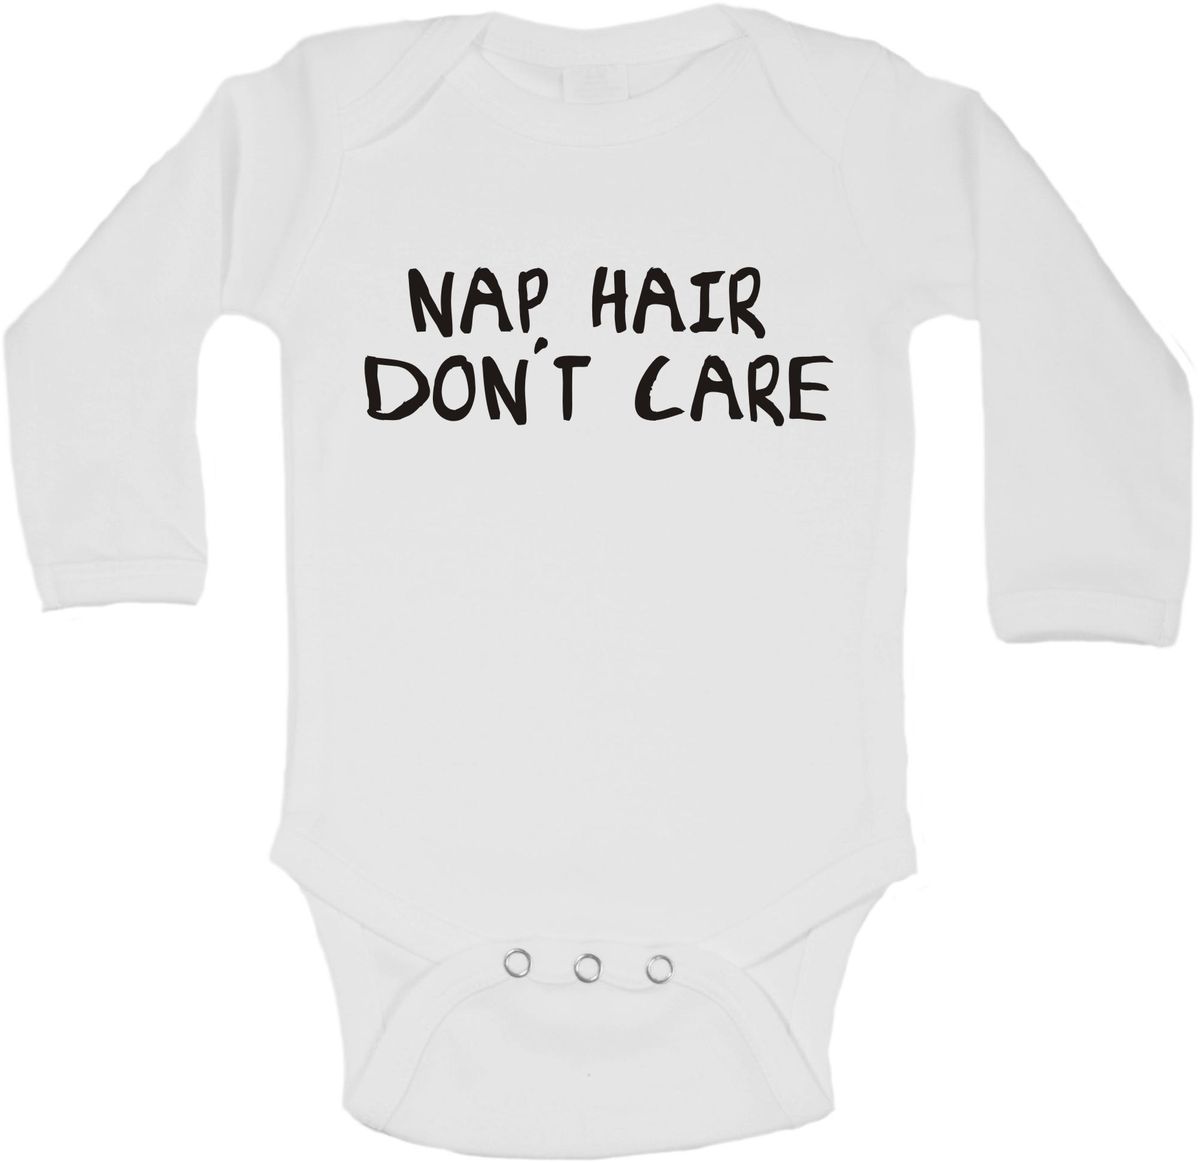 Nap Hair Don't Care Toddler Tee